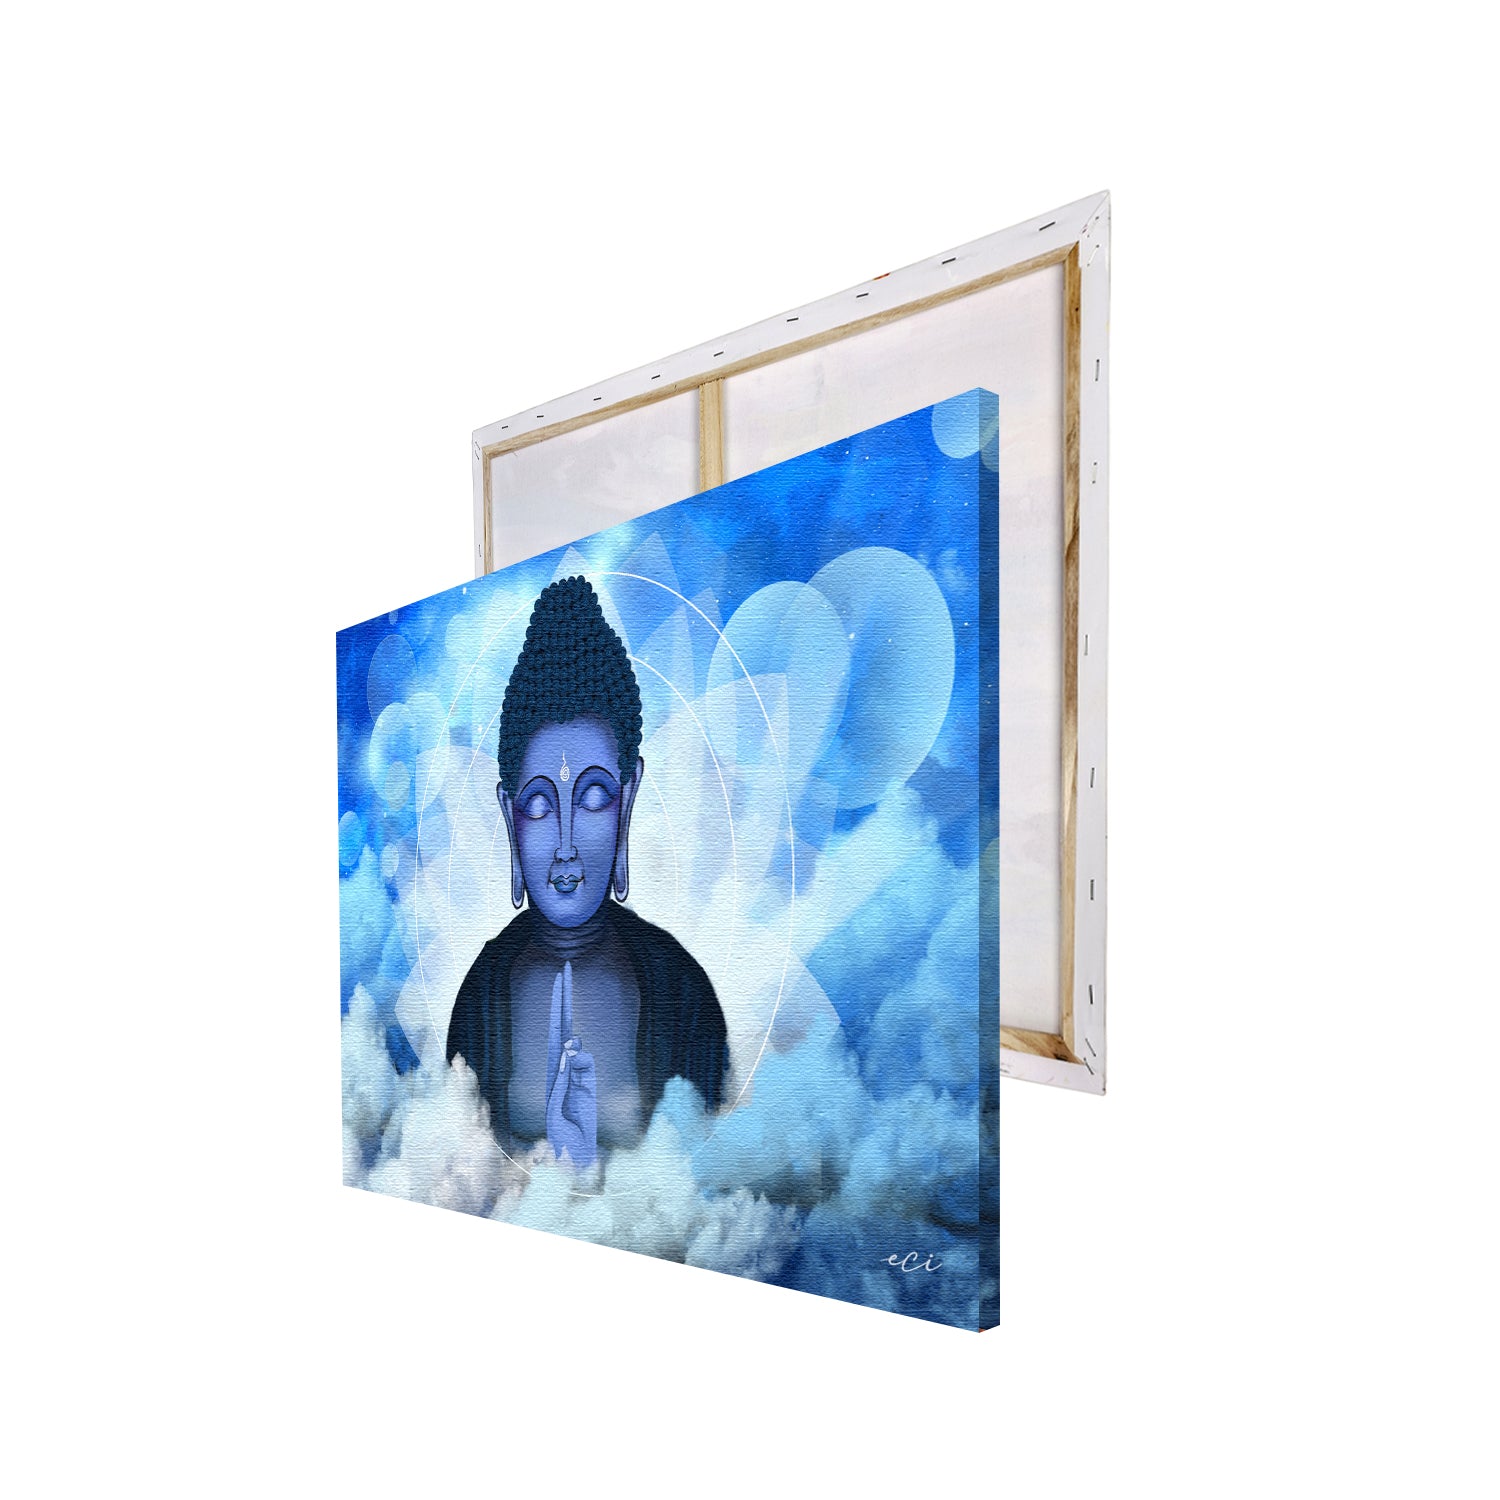 Meditating Buddha between Clouds Original Design Canvas Printed Wall Painting 4